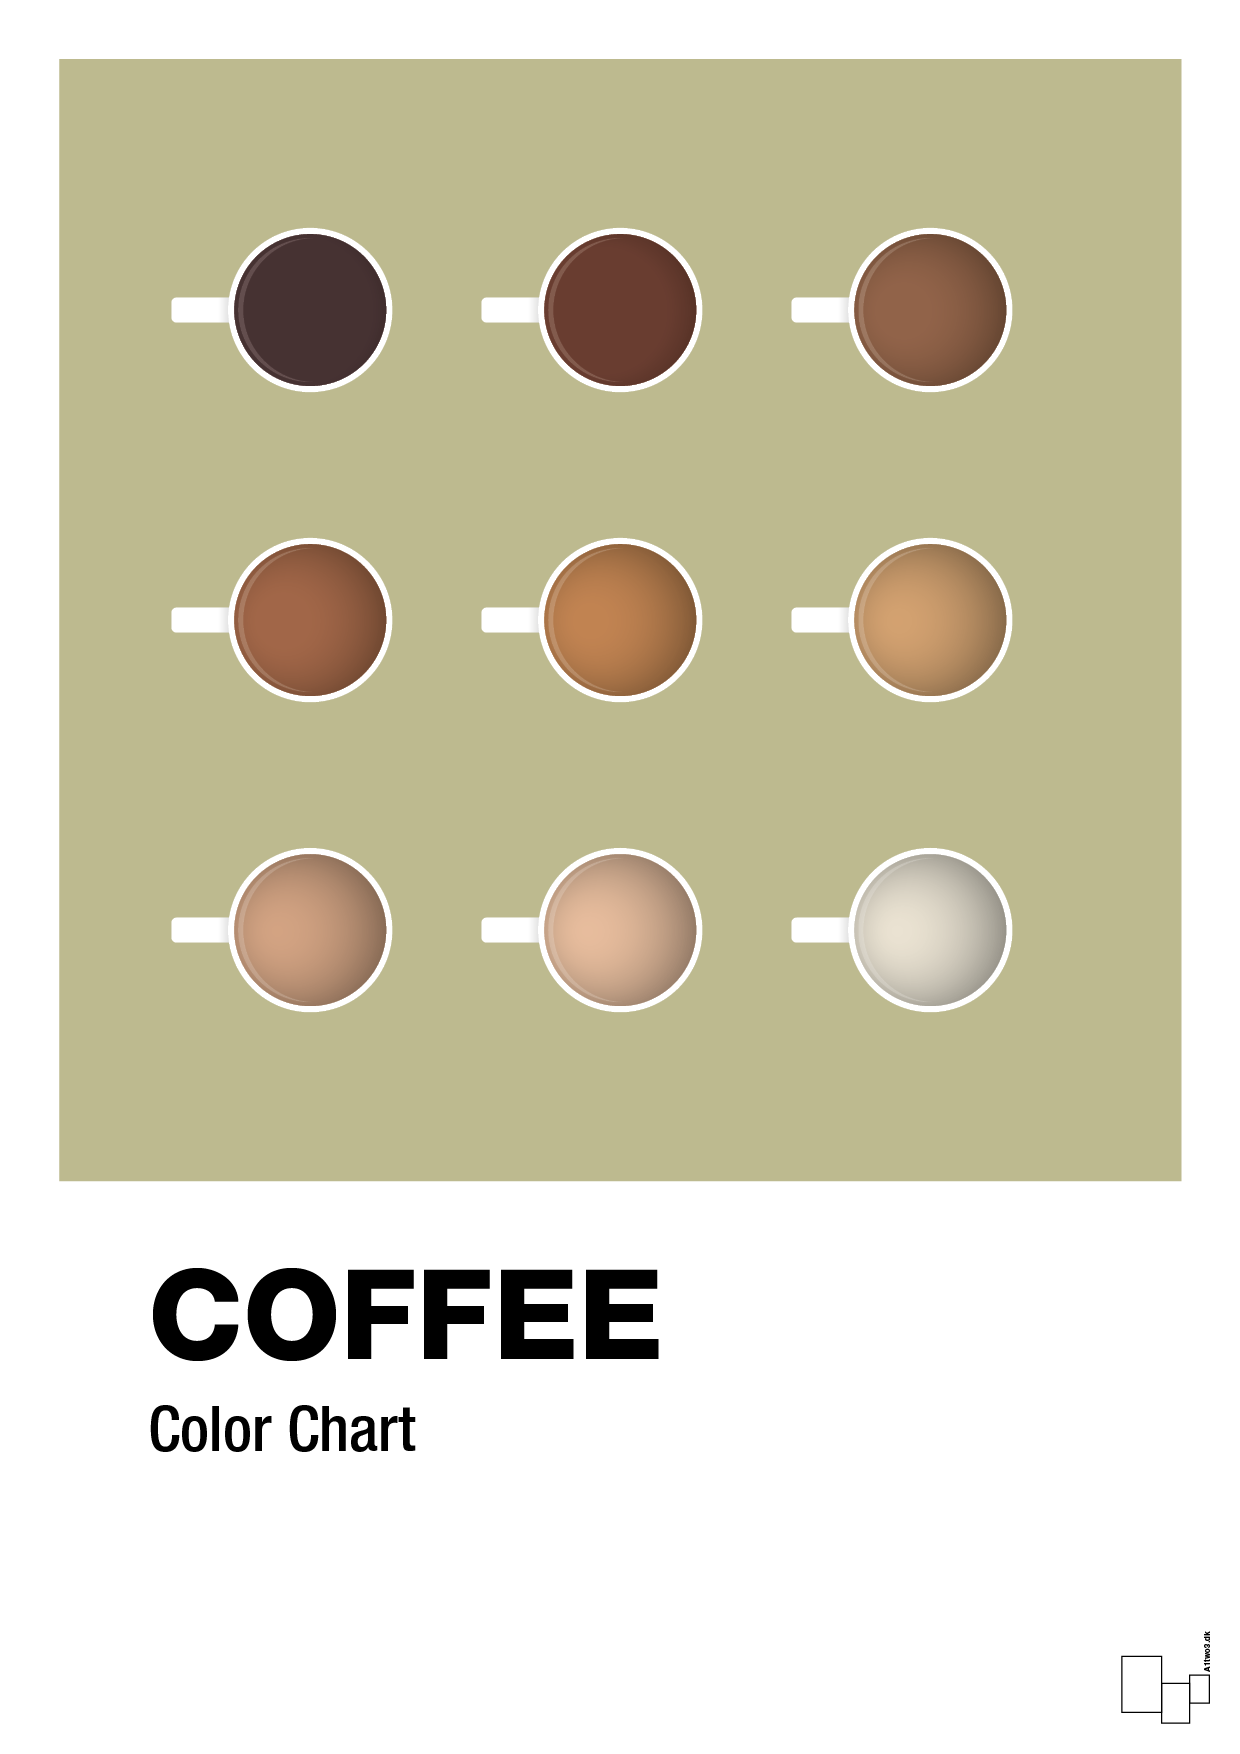 coffee color chart - Plakat med Mad & Drikke i Back to Nature